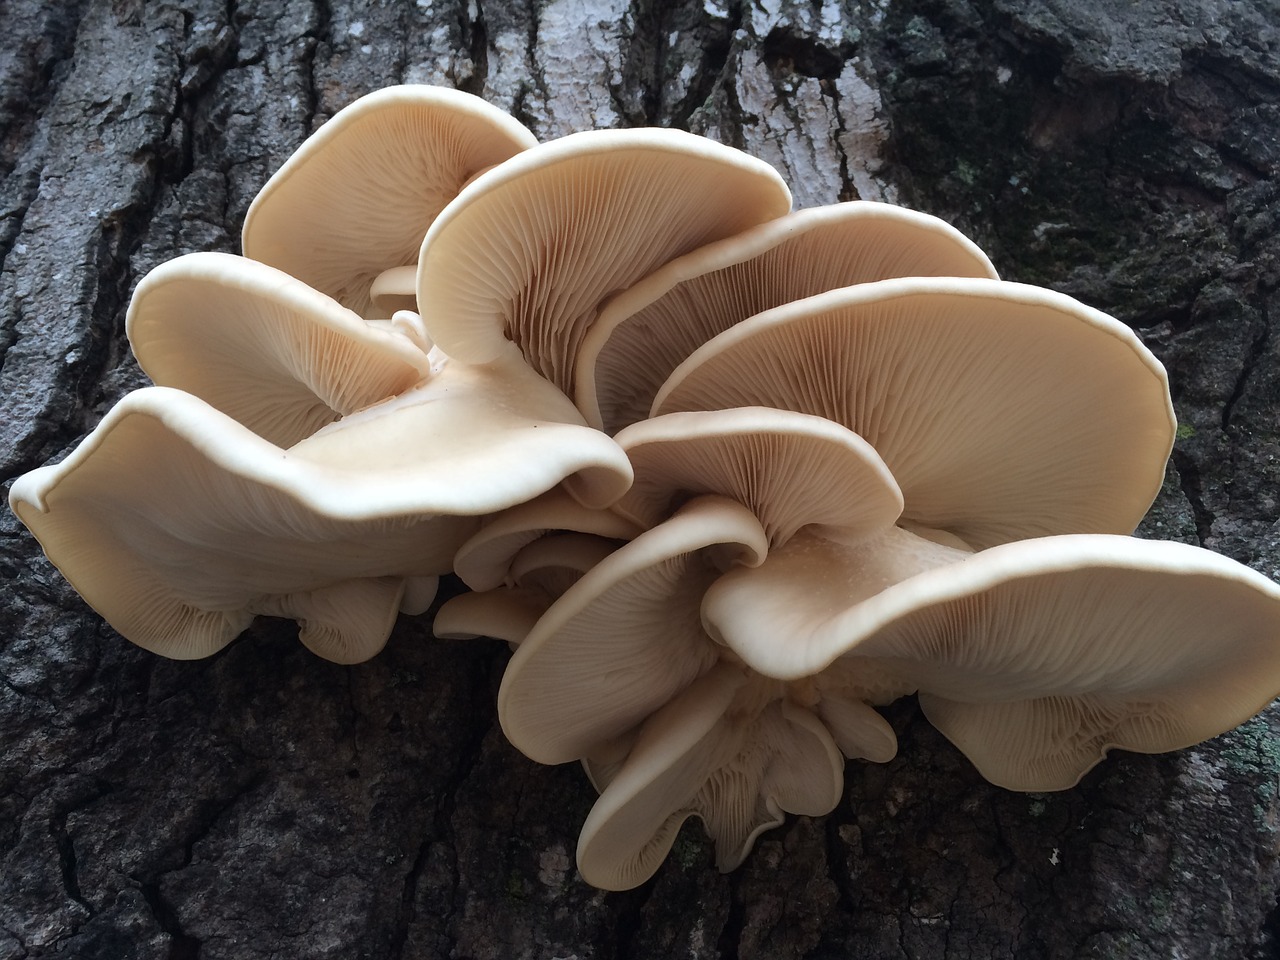 mushroom after rain old oak tree with fungi free photo